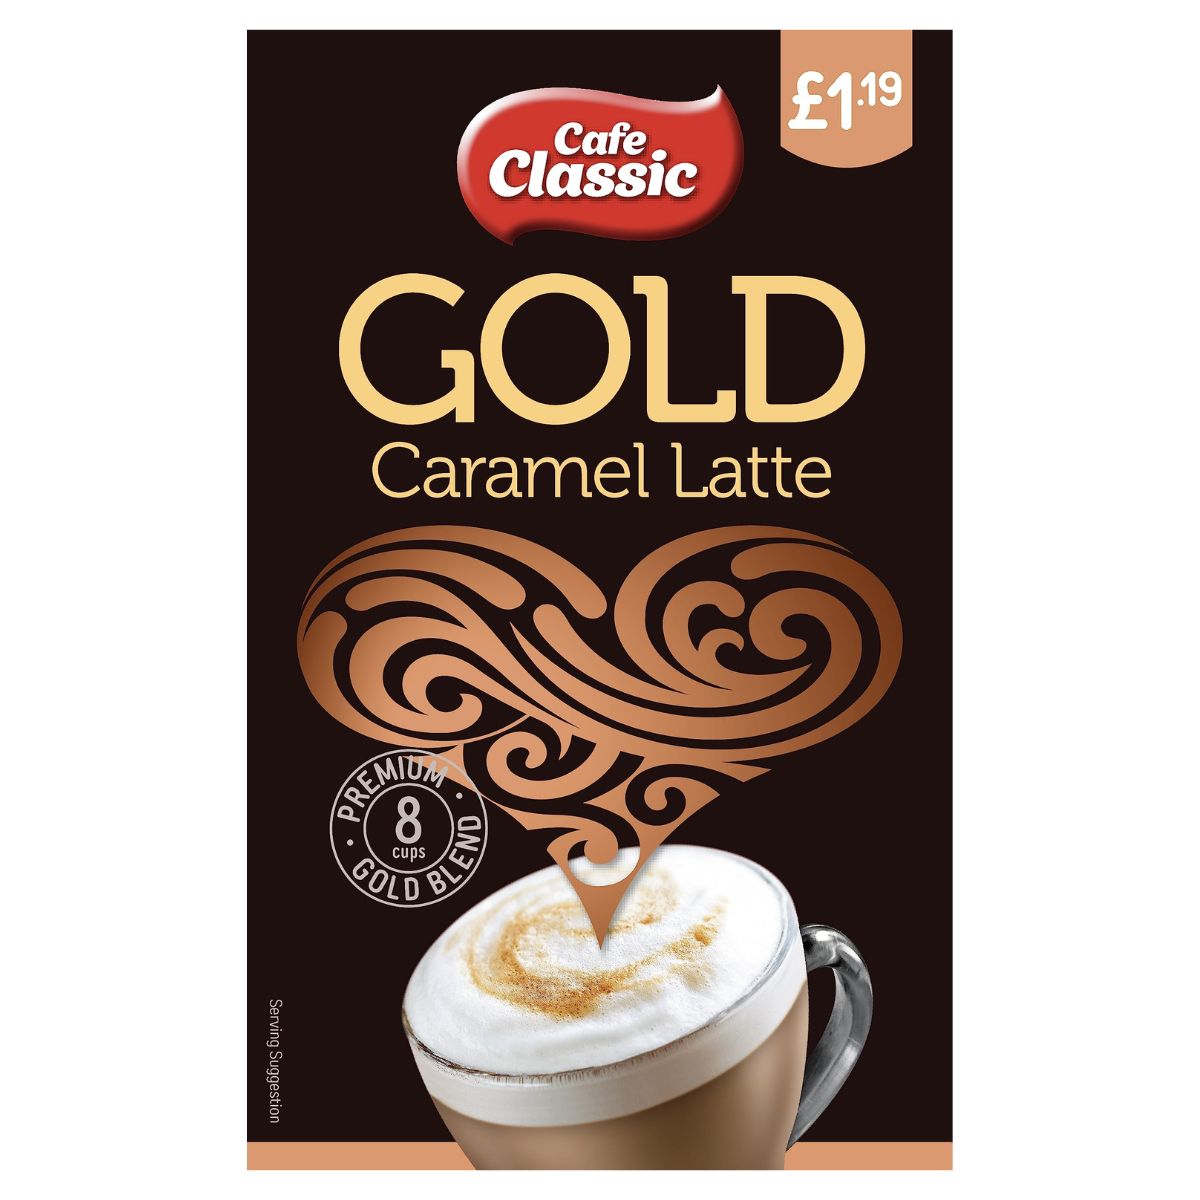 Cafe Classic - Gold Caramel Latte - 112g.